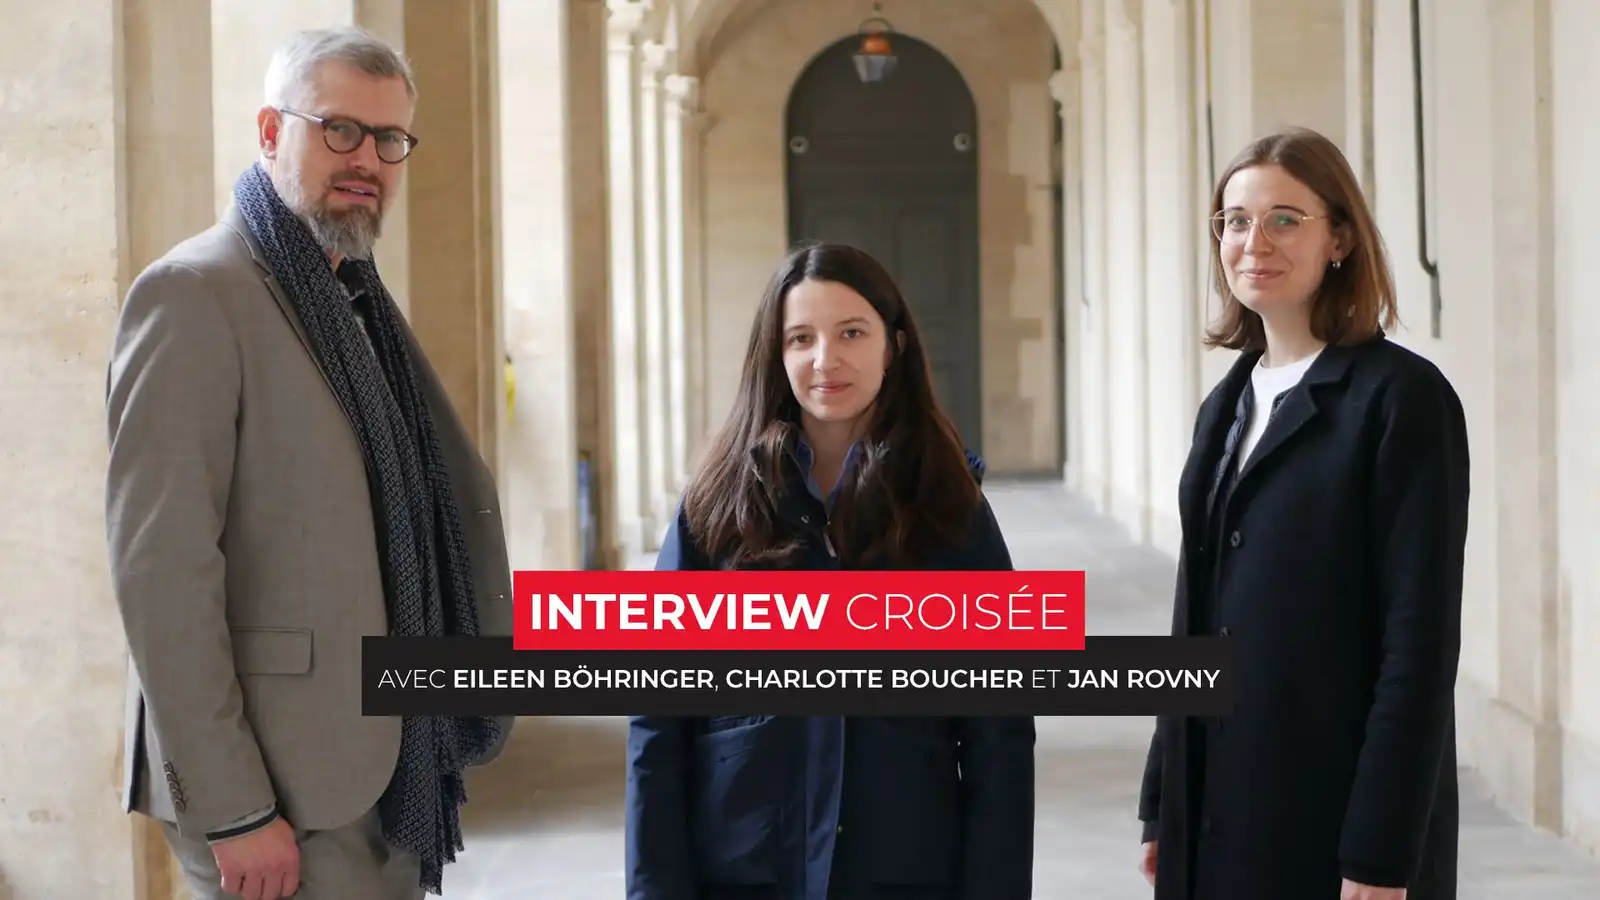 Interview croisée : Eileen Böhringer, Charlotte Boucher et Jan Rovny